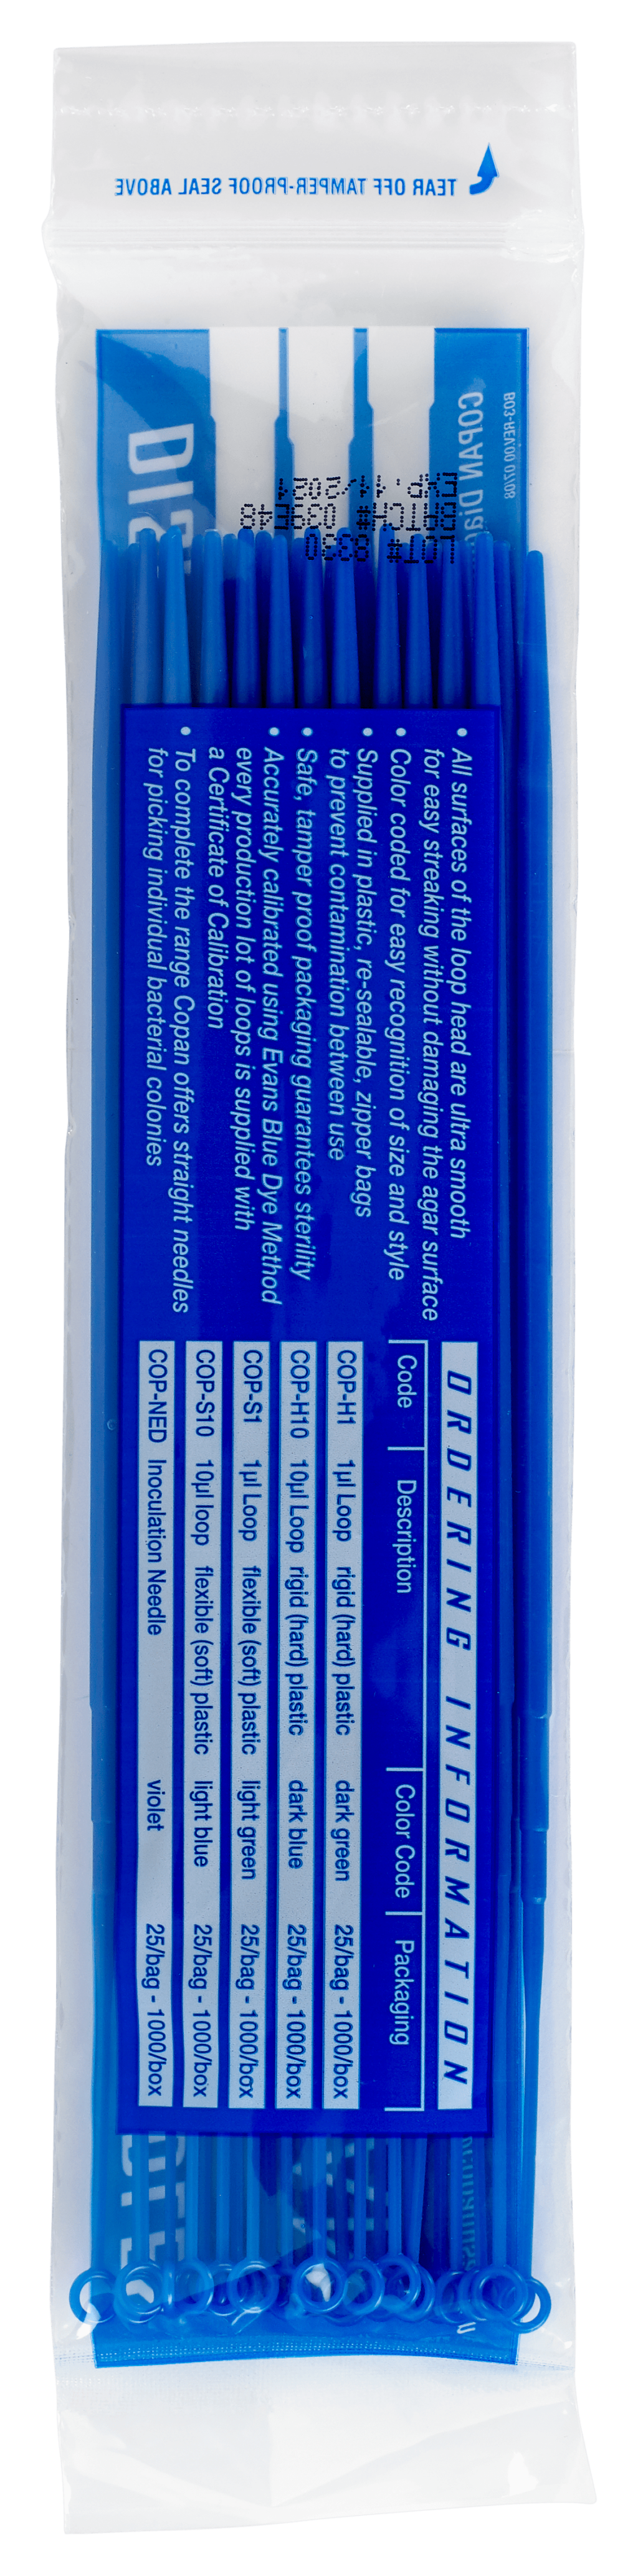 Plastic Inoculating Loops, Needles & Spreaders COP-H10 10 µL Rigid Dark Blue Plastic Inoculation Loop - 25 per Bag